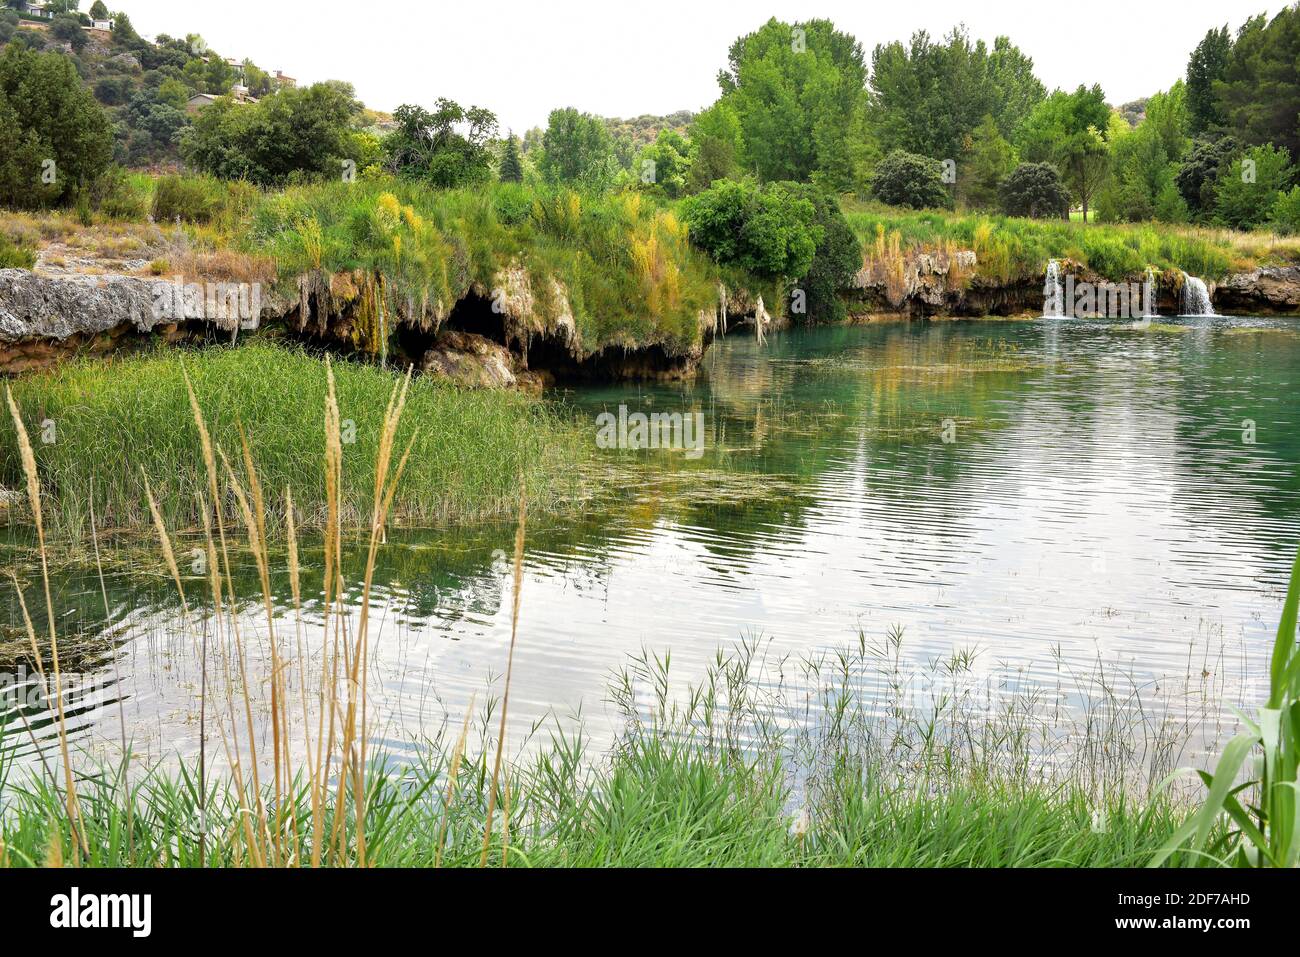 Laguna Lengua, laguna cárstica. Caída entre las lagunas de Redondilla y Lengua. Parque Natural lagunas de Ruidera, Guadiana Viejo, provincia de Albacete, Foto de stock